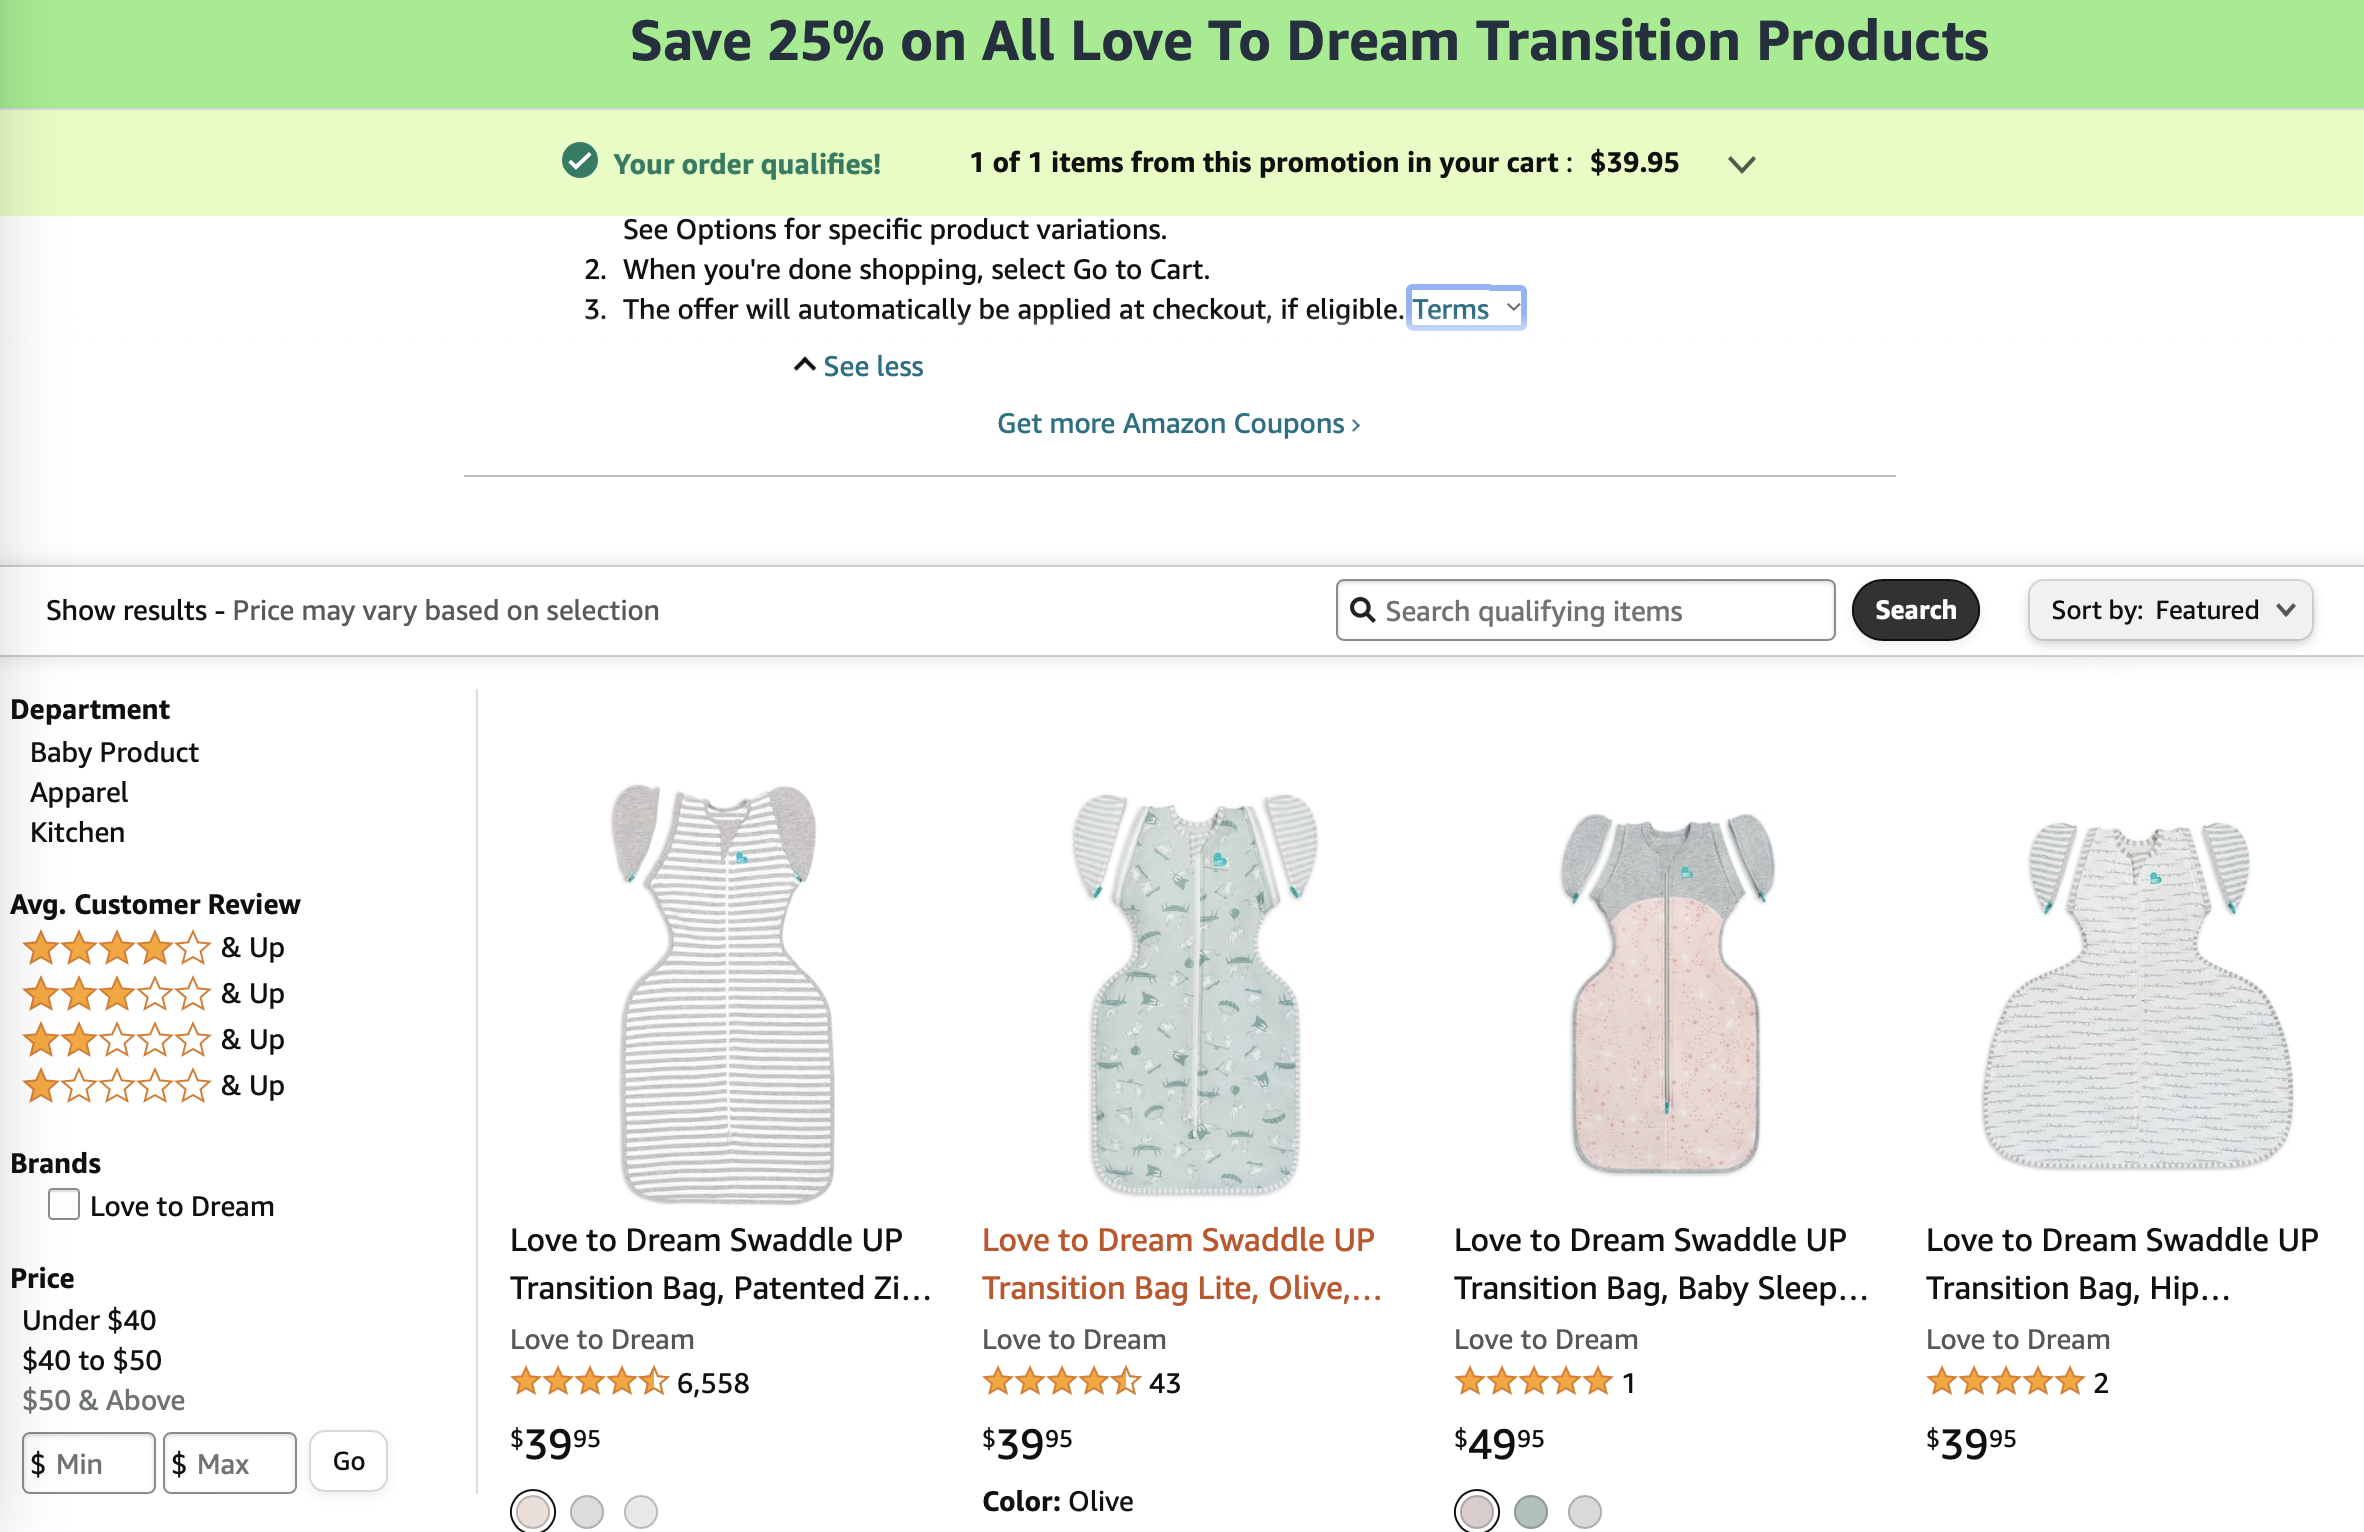 Amazon.com: Love to Dream Swaddle UP Transition Bag 宝宝睡袋促销 后悔没早点用，睡渣宝宝变睡神 7.5折 多种款式